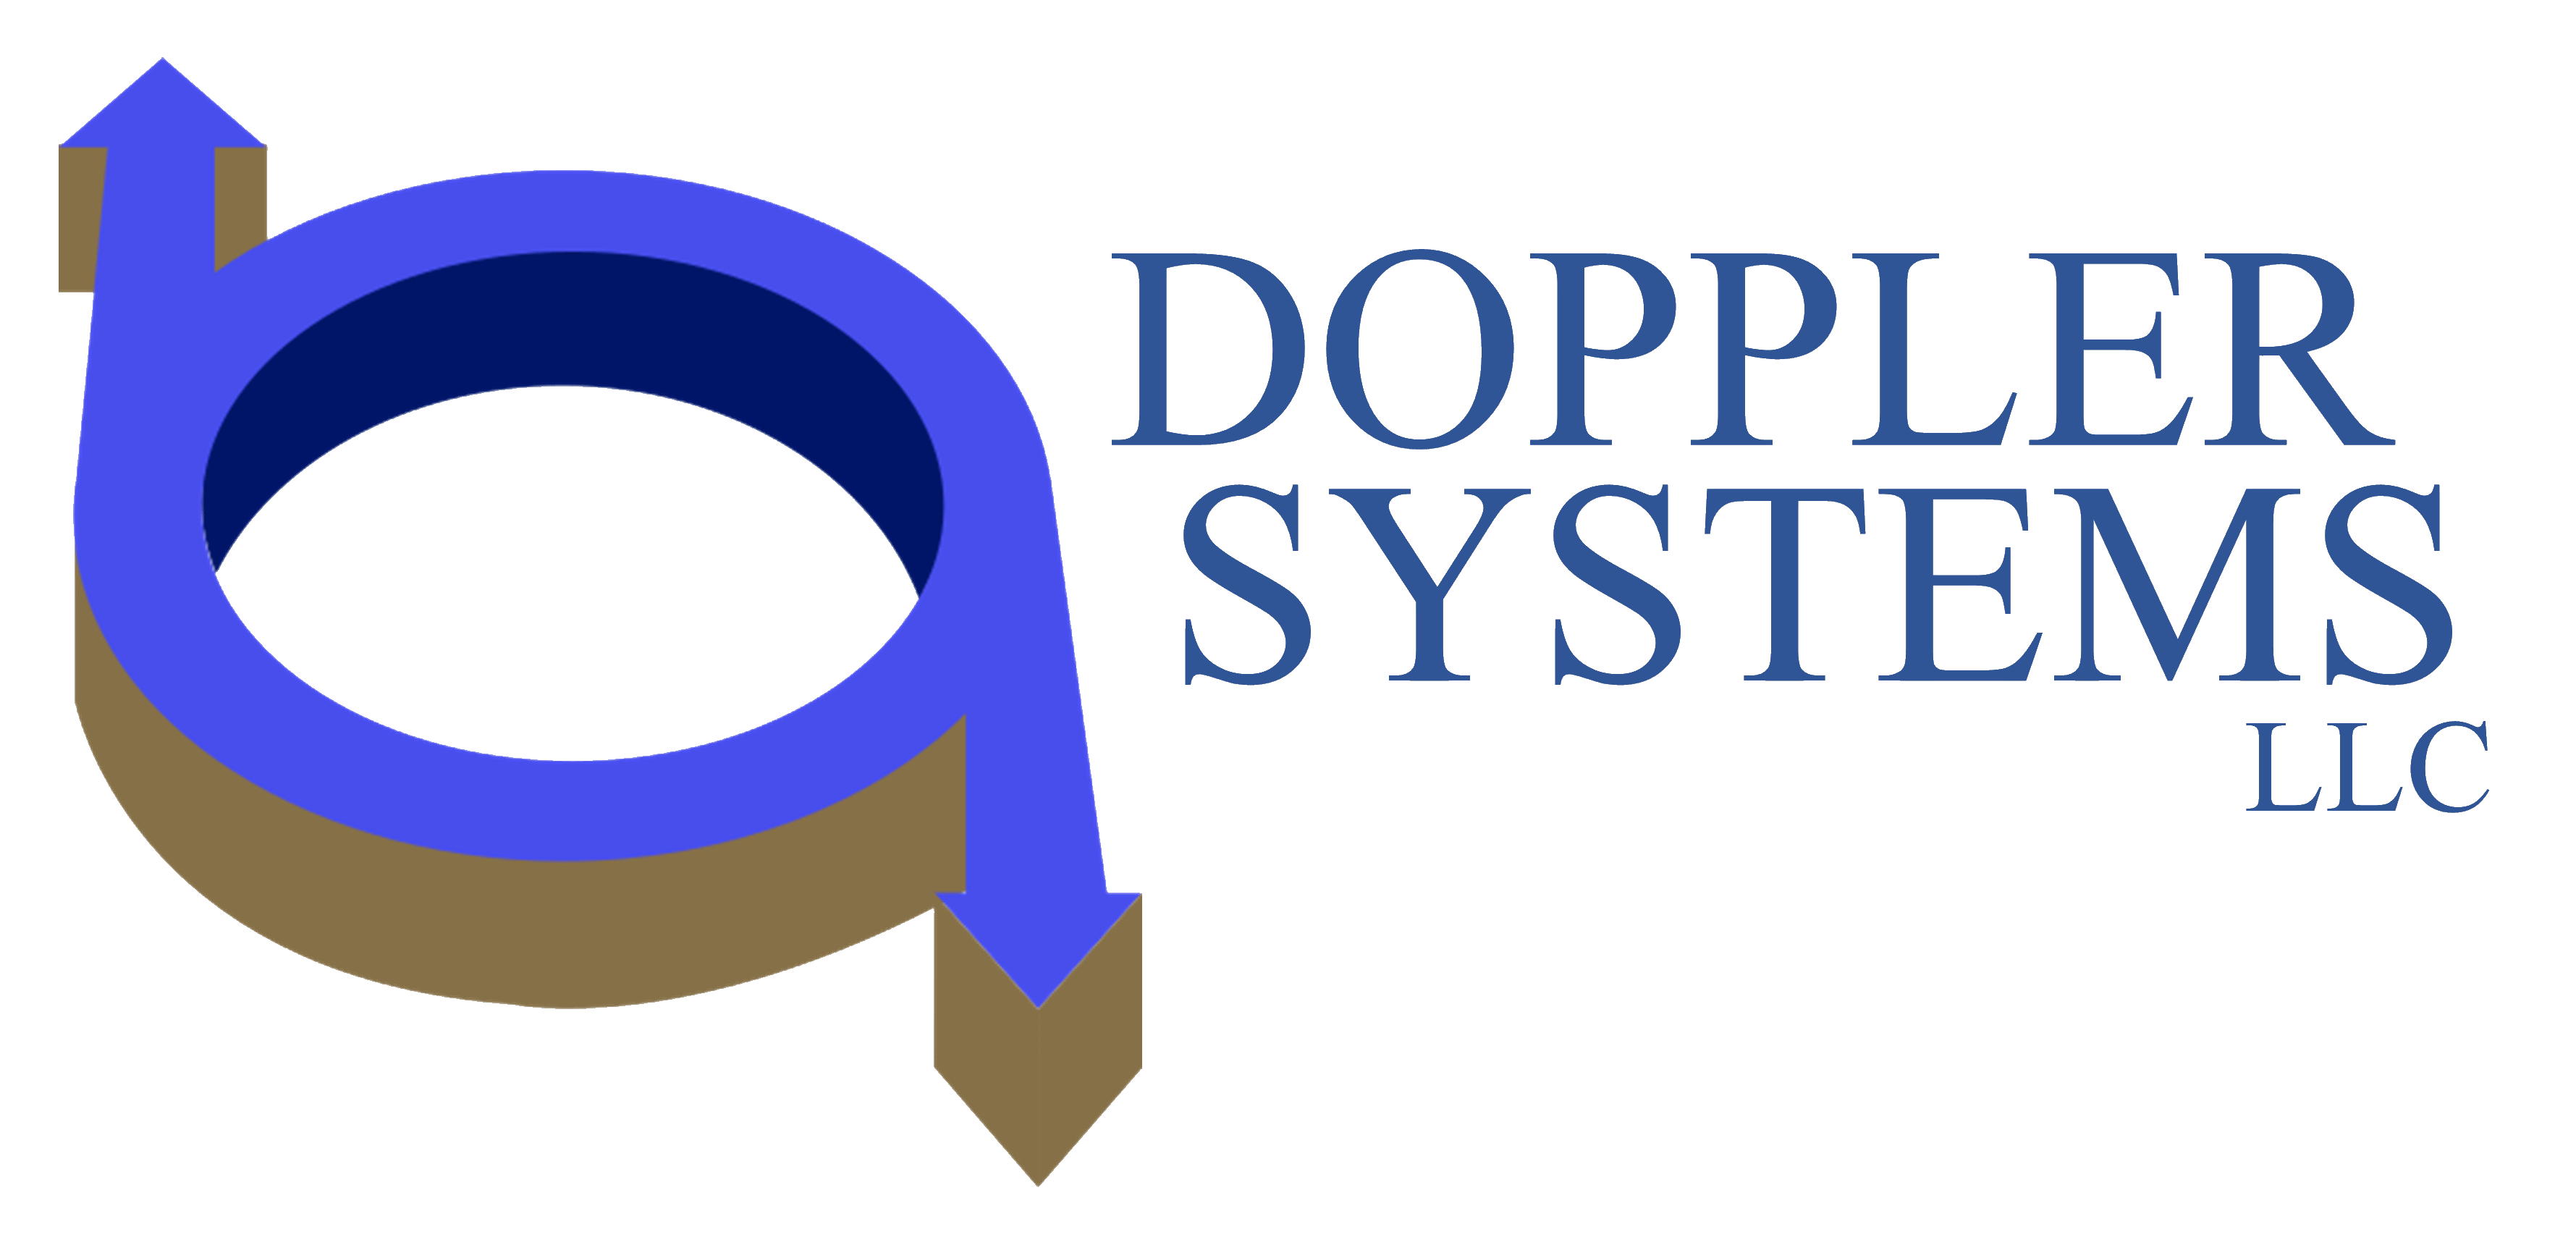 Doppler Systems, LLC